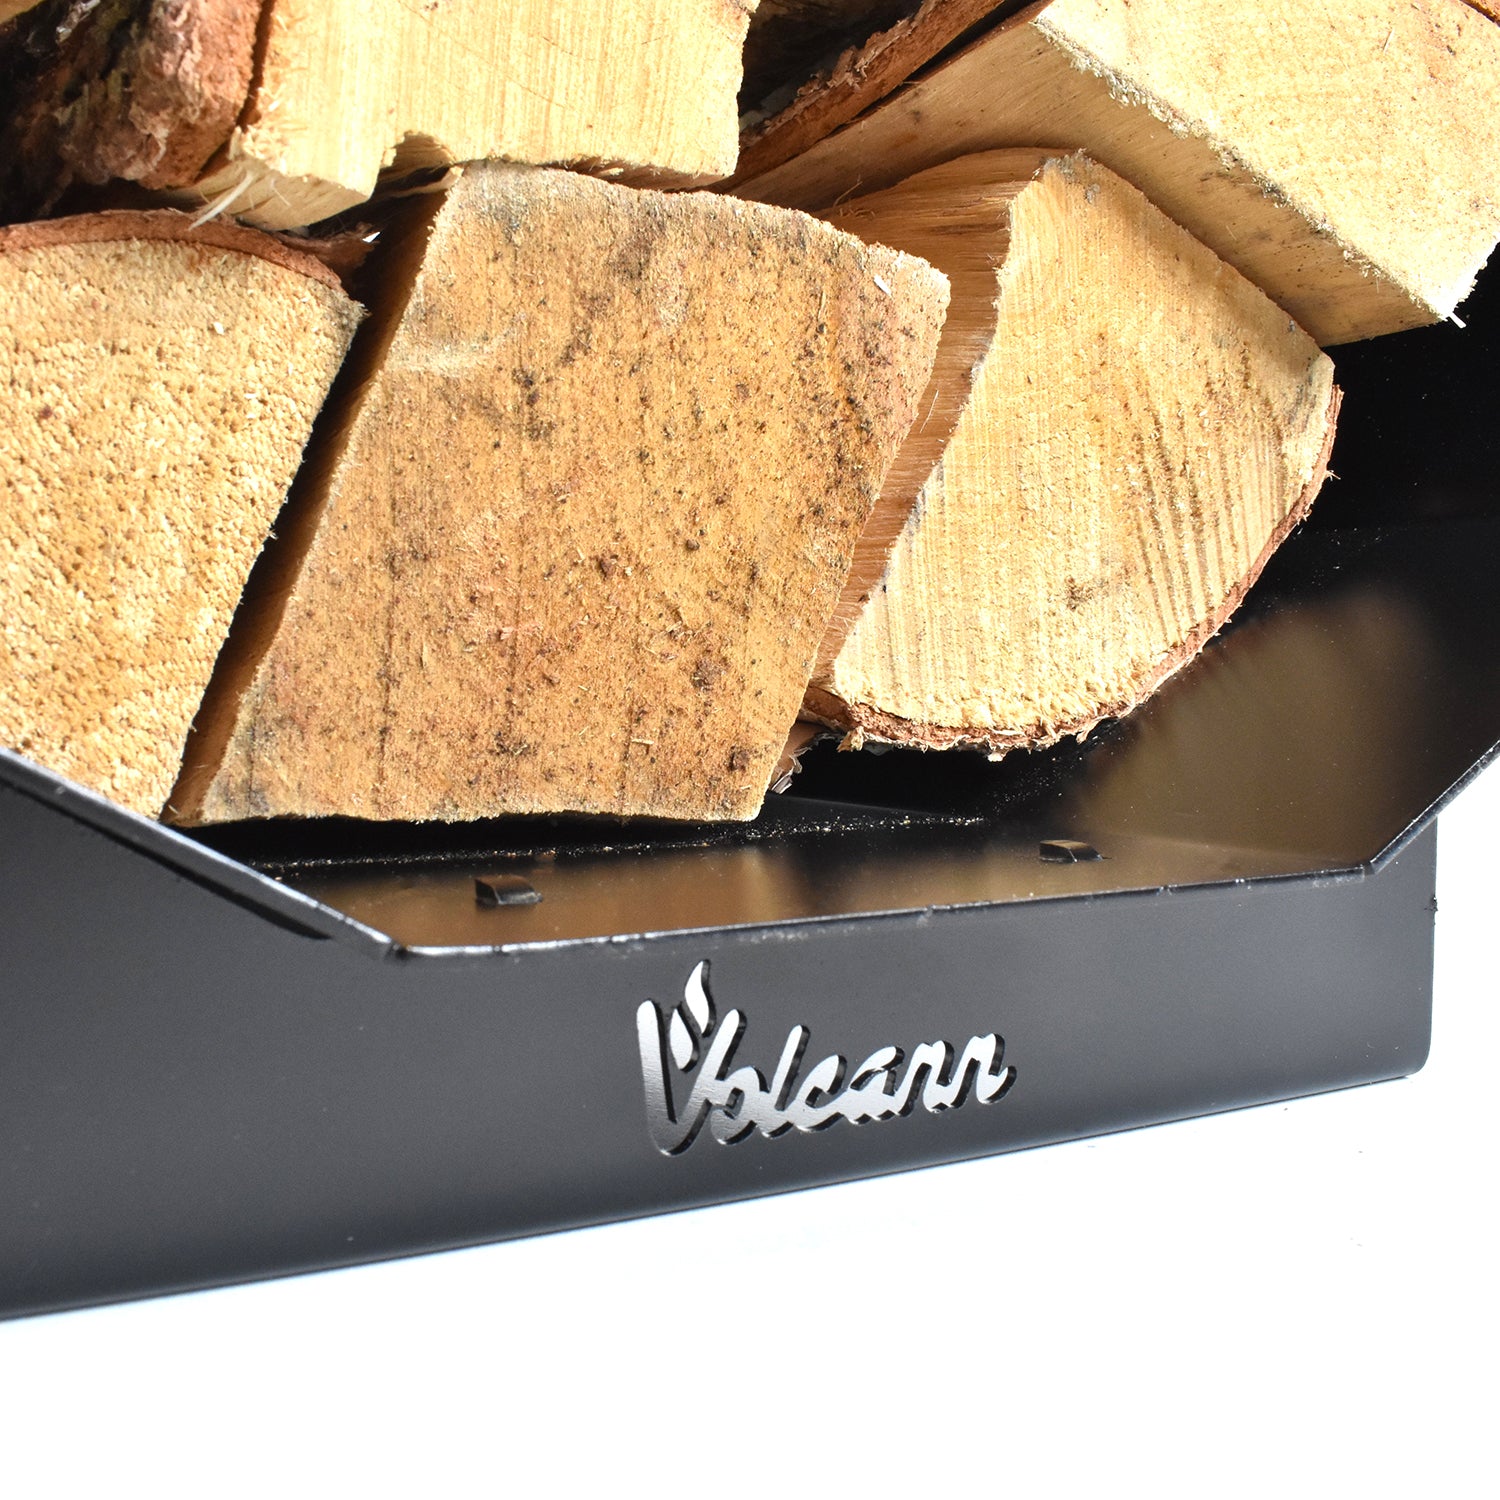 Volcann™ Polygonal Firewood Log Basket